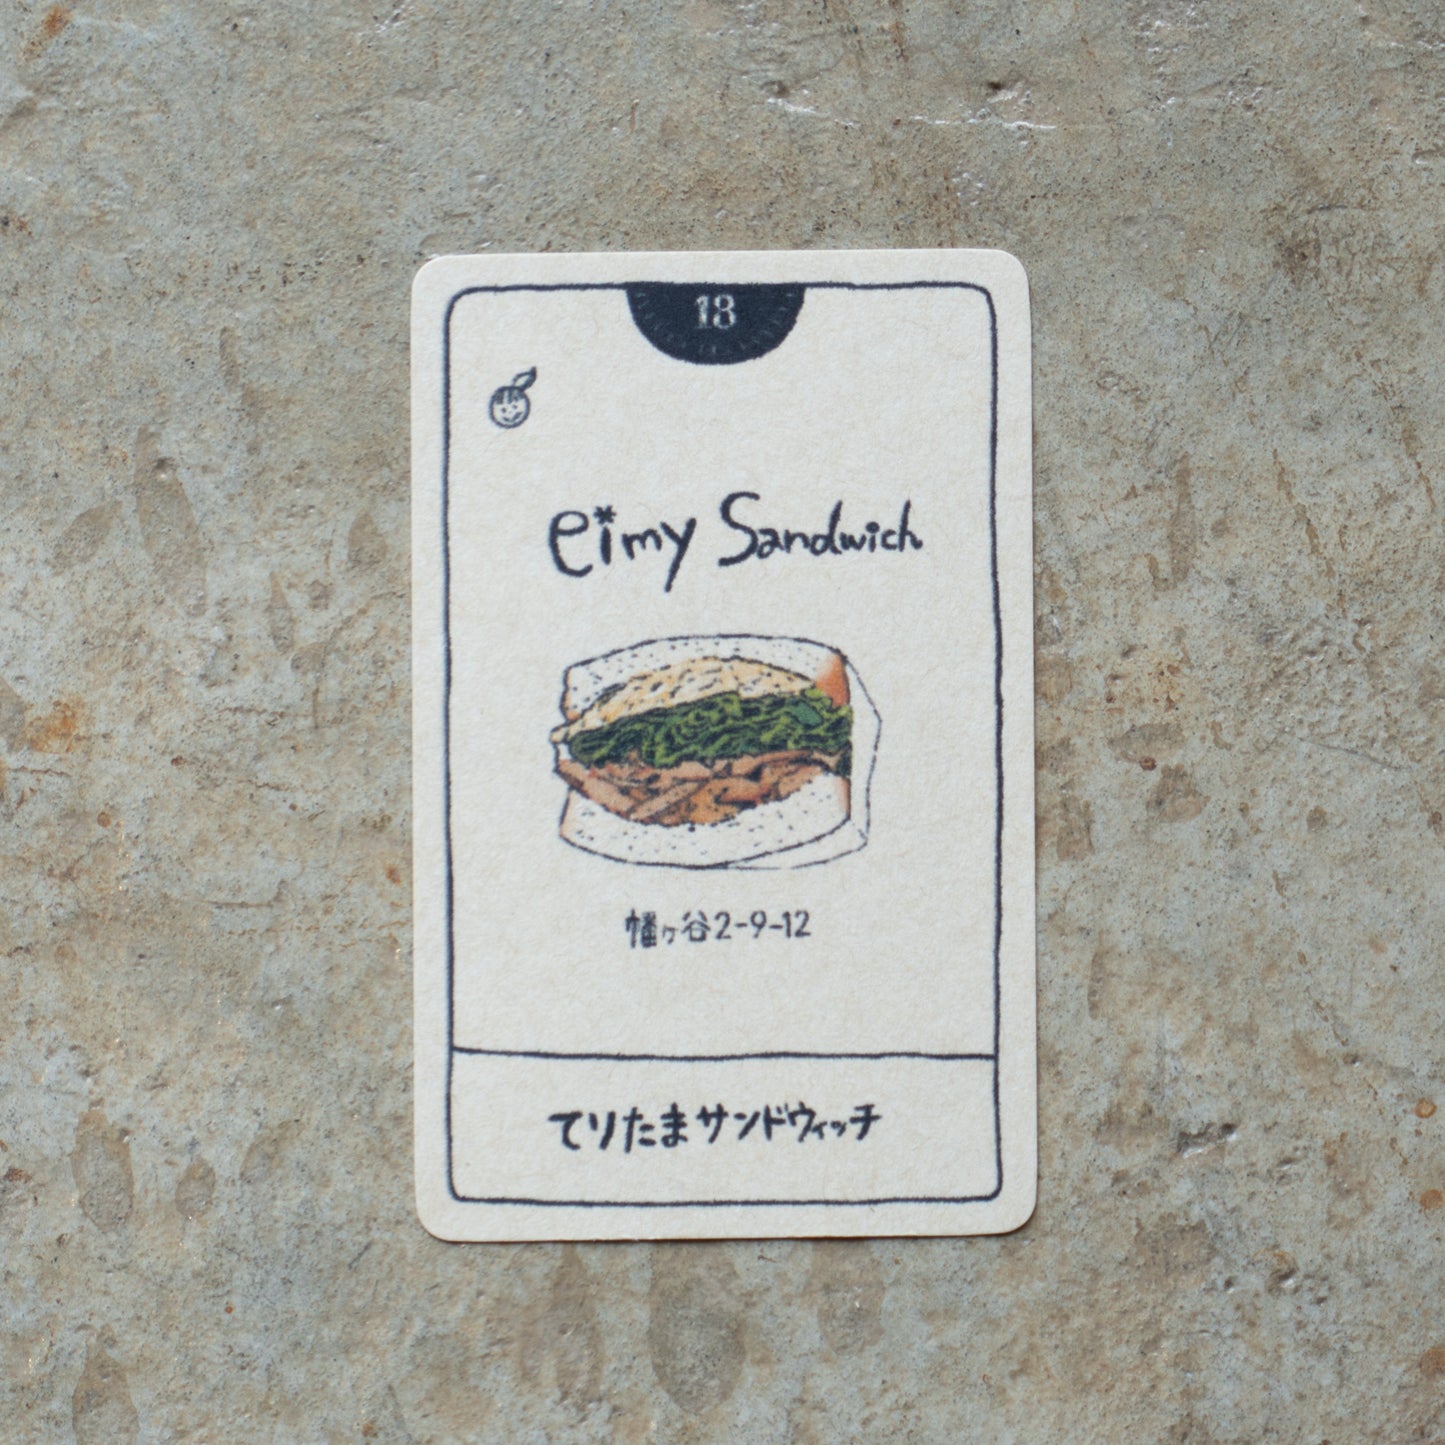 eimy sandwich てりたまサンドイッチ | KITASHIBU FOOD TAROT 018